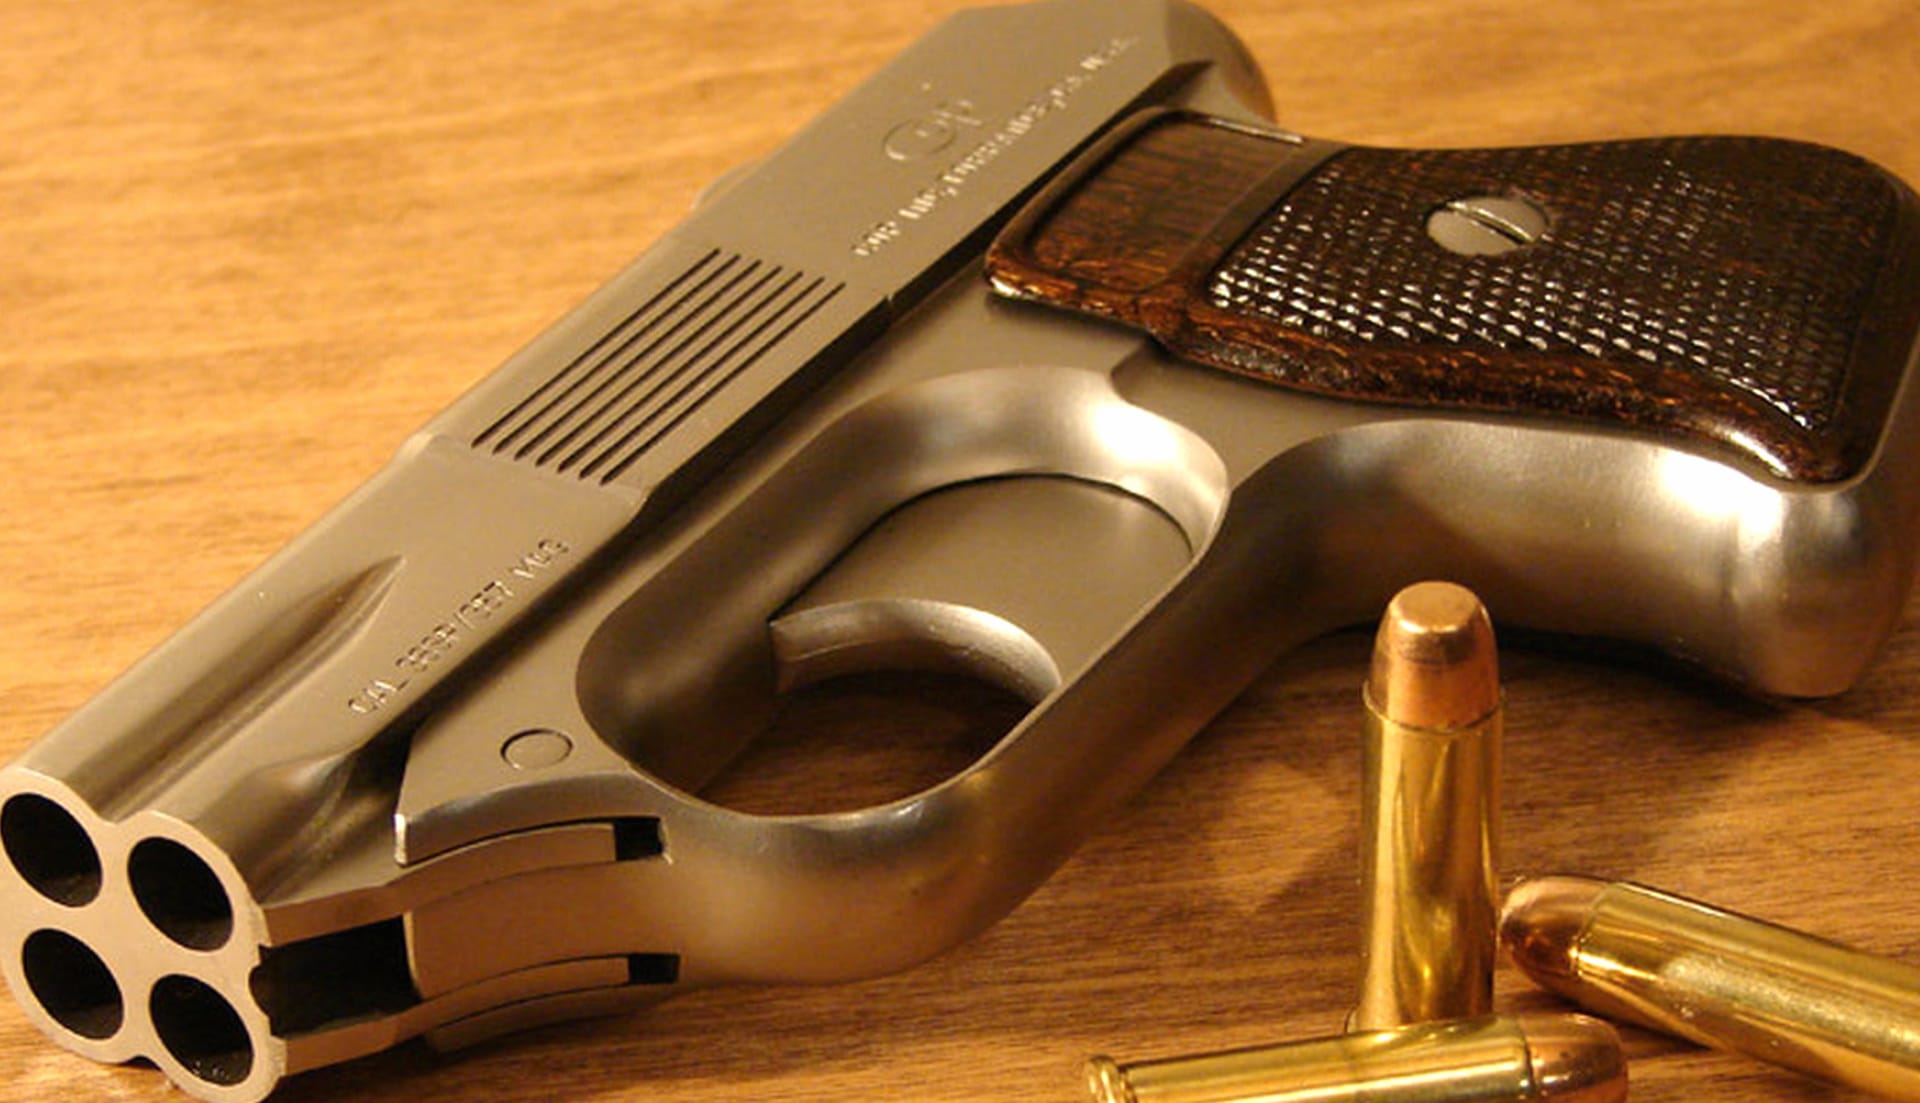 Cop .357 Derringer Pistol wallpapers HD quality